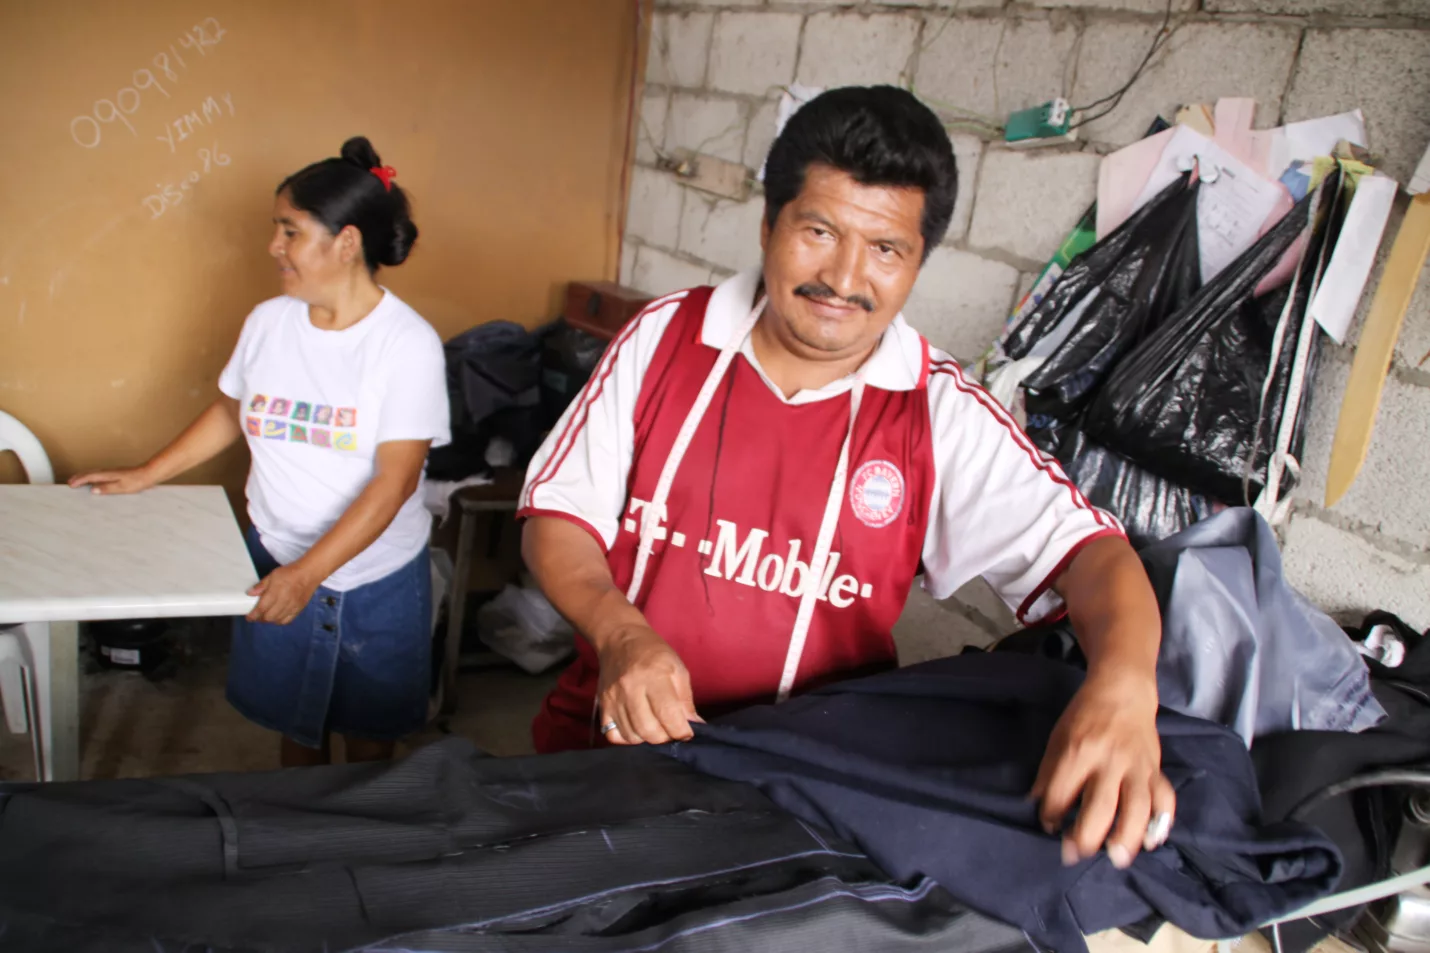 Production customer in Ecuador